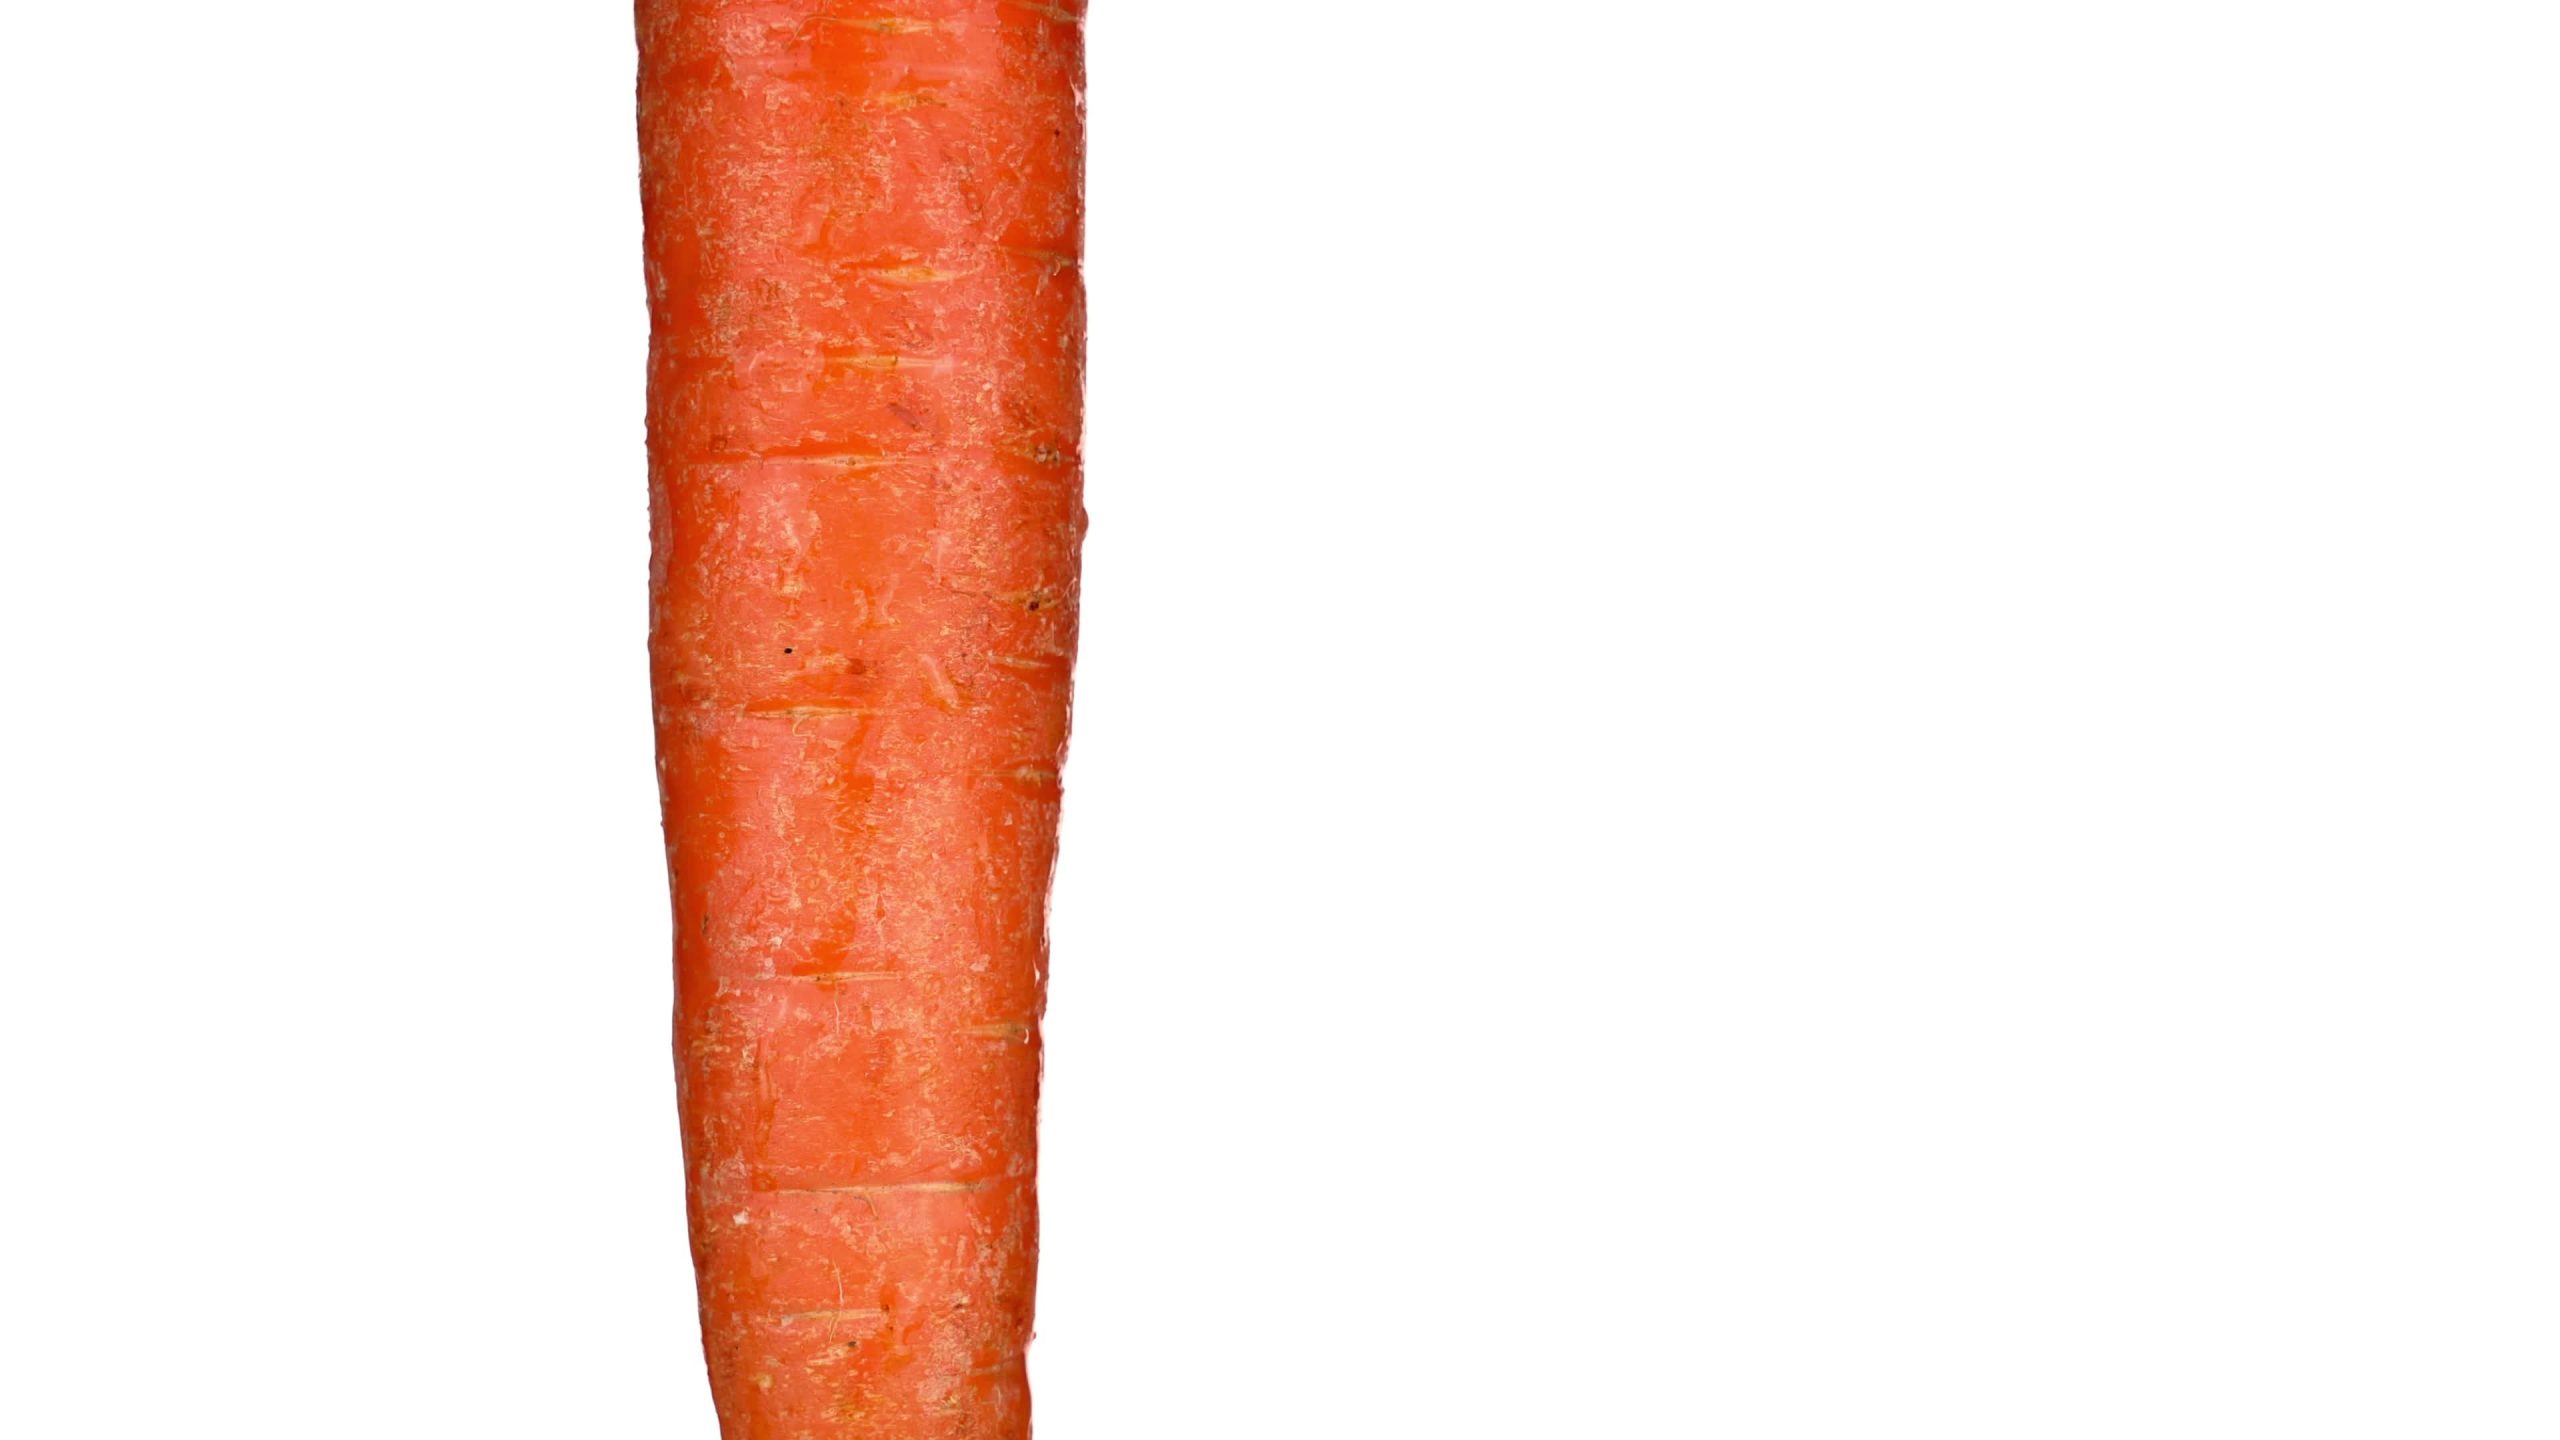 La carota arancione fresca gira su fondo bianco